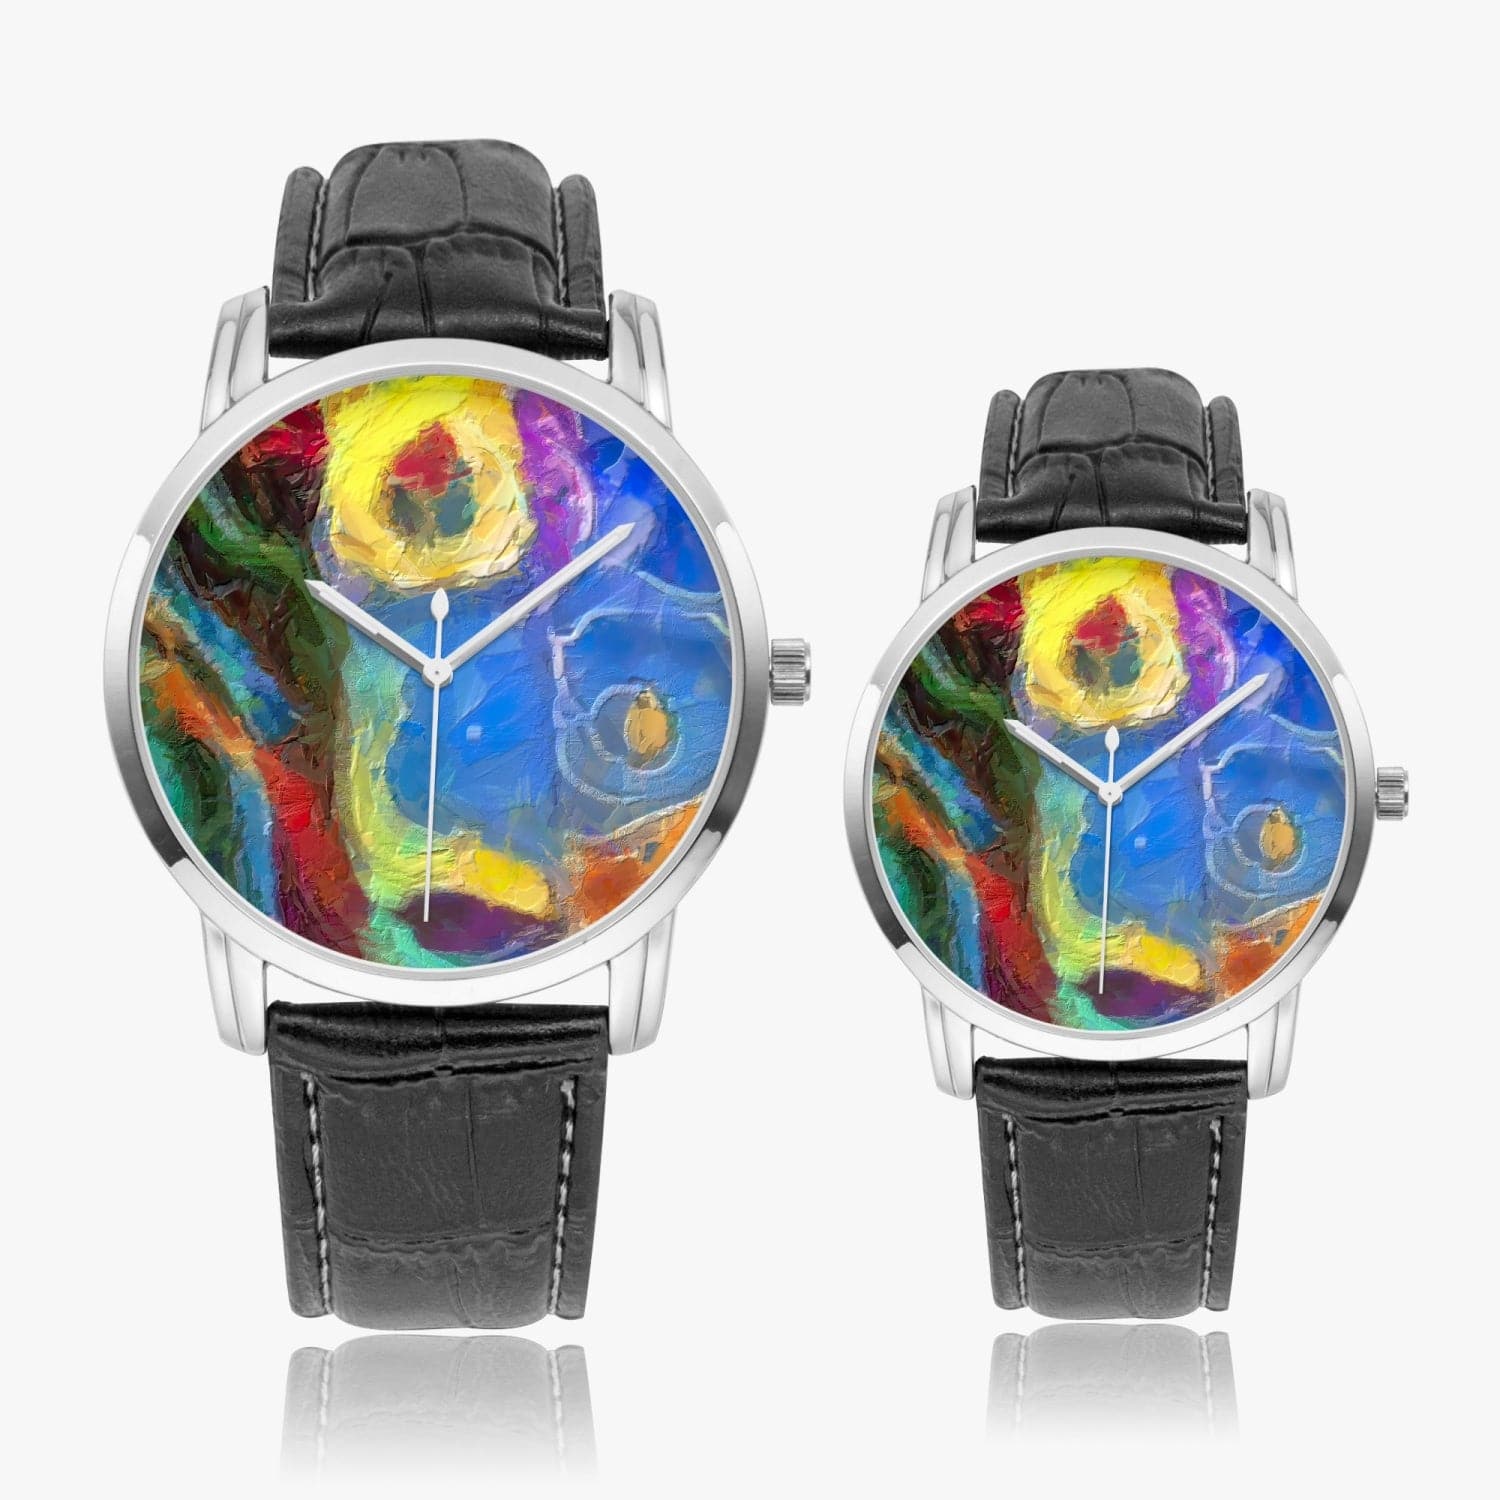 Art in Blue Minor - Wide Type Quartz watch, designed by Sensus Studio Design